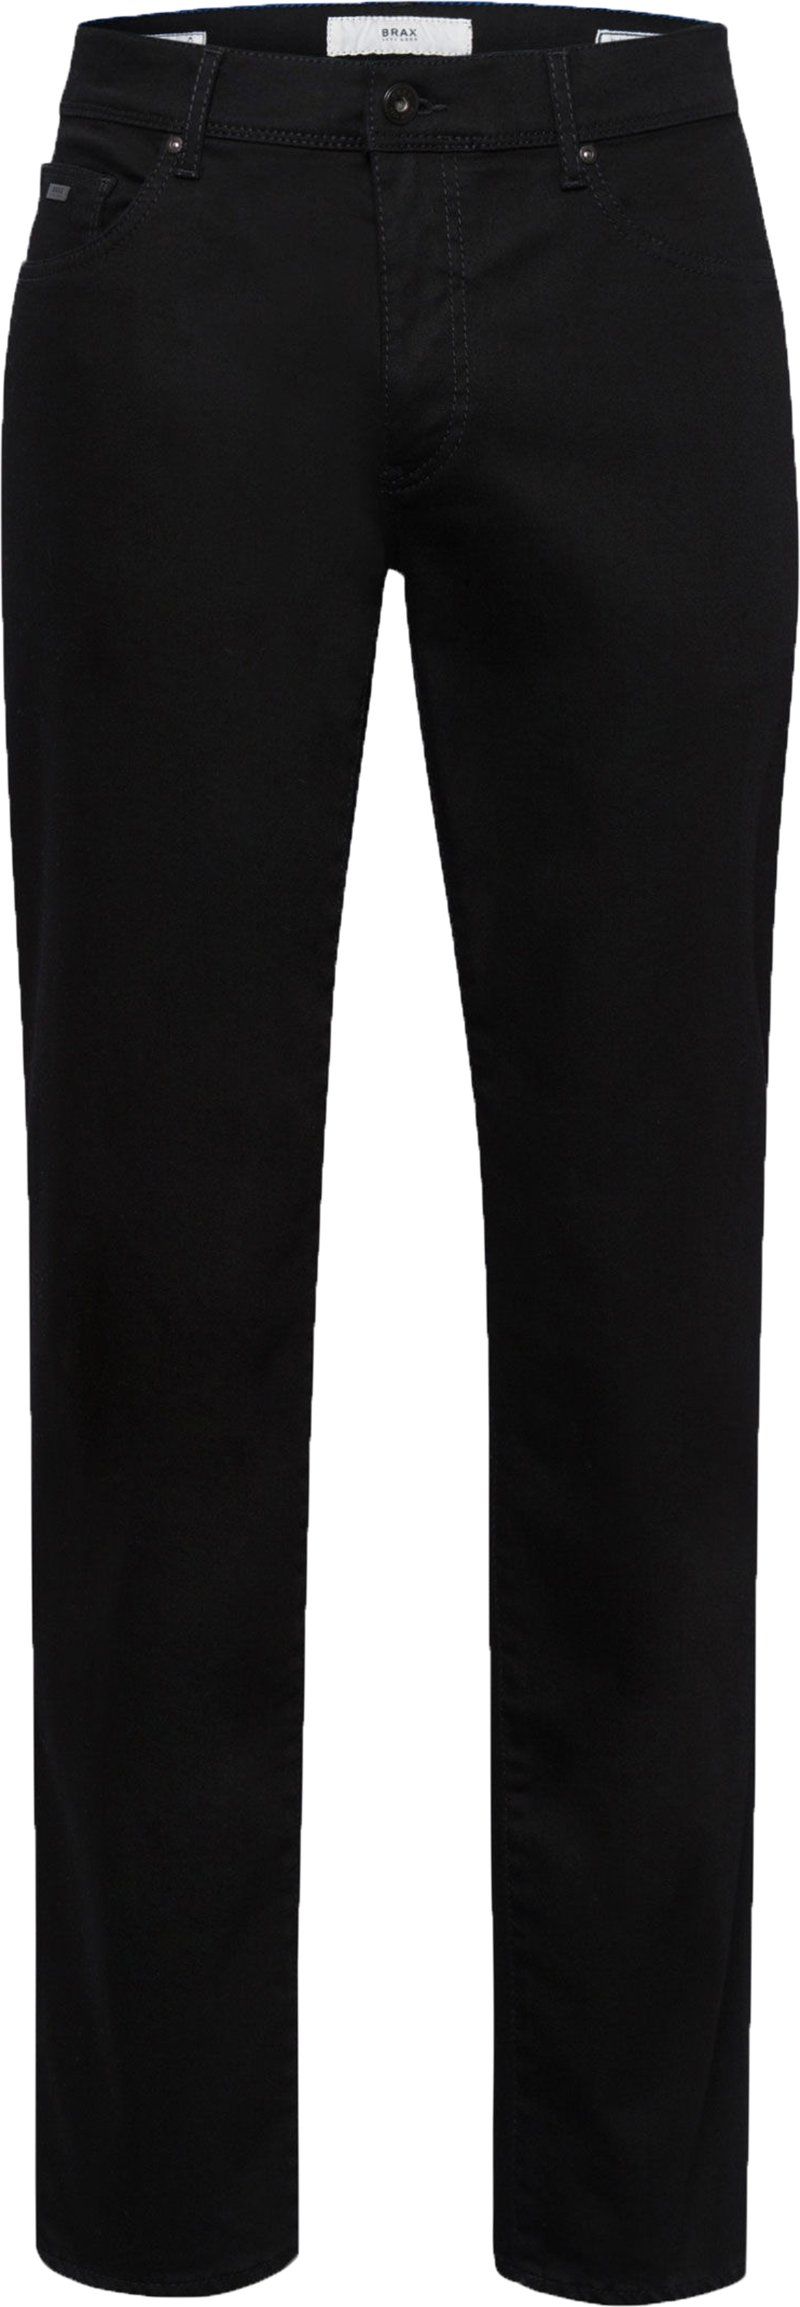 Brax Cadiz Pants Black size W 30